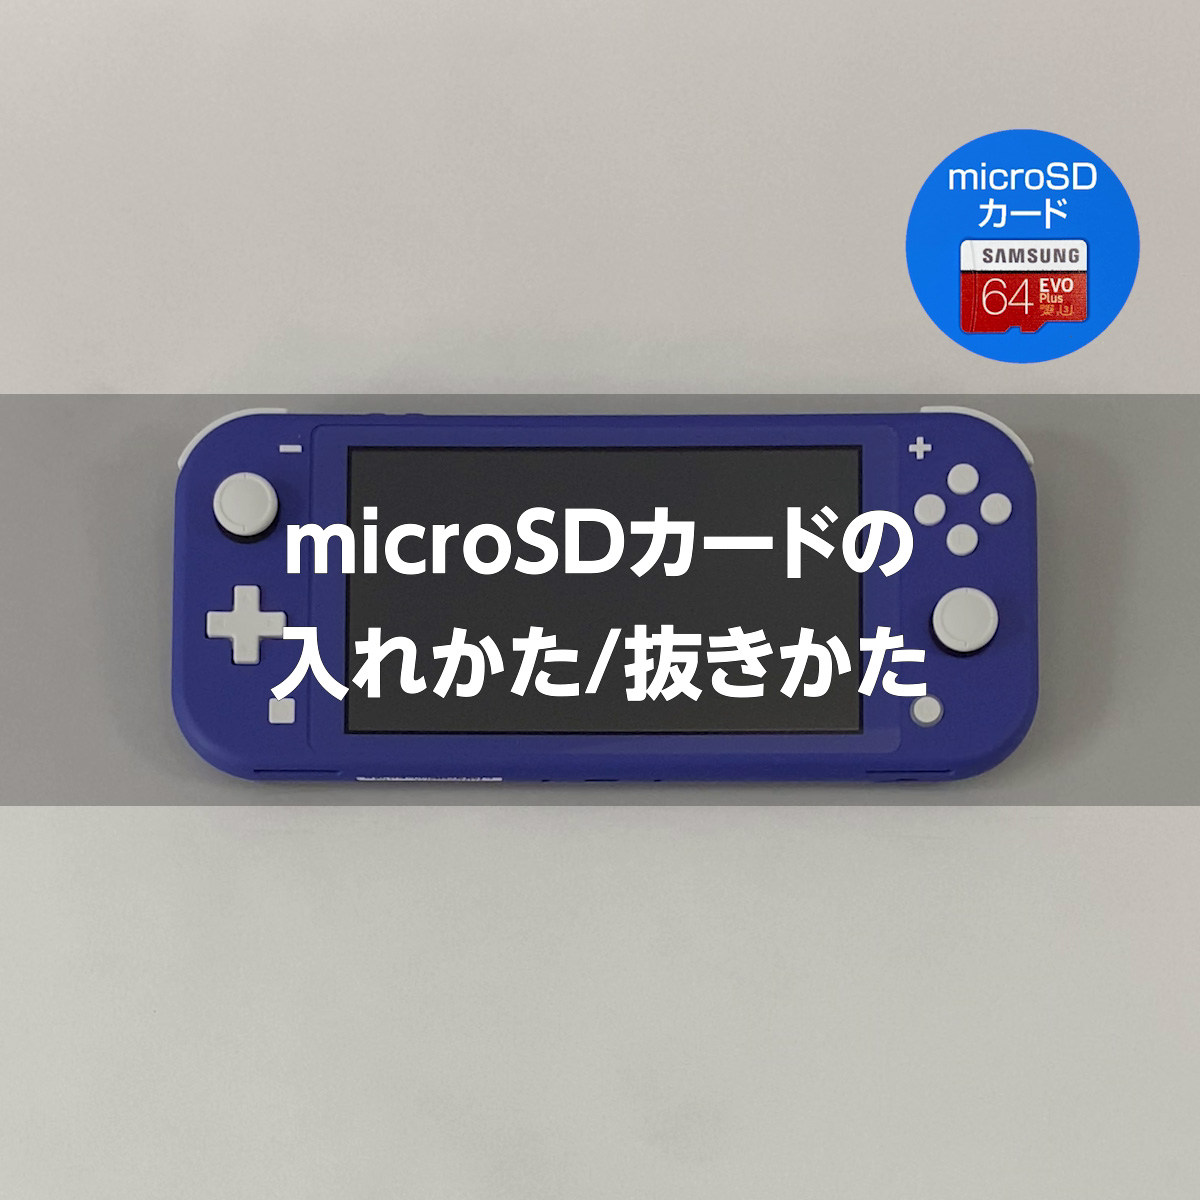 Nintendo Switch グレー 本体 64GB SDカード付き - テレビ/映像機器